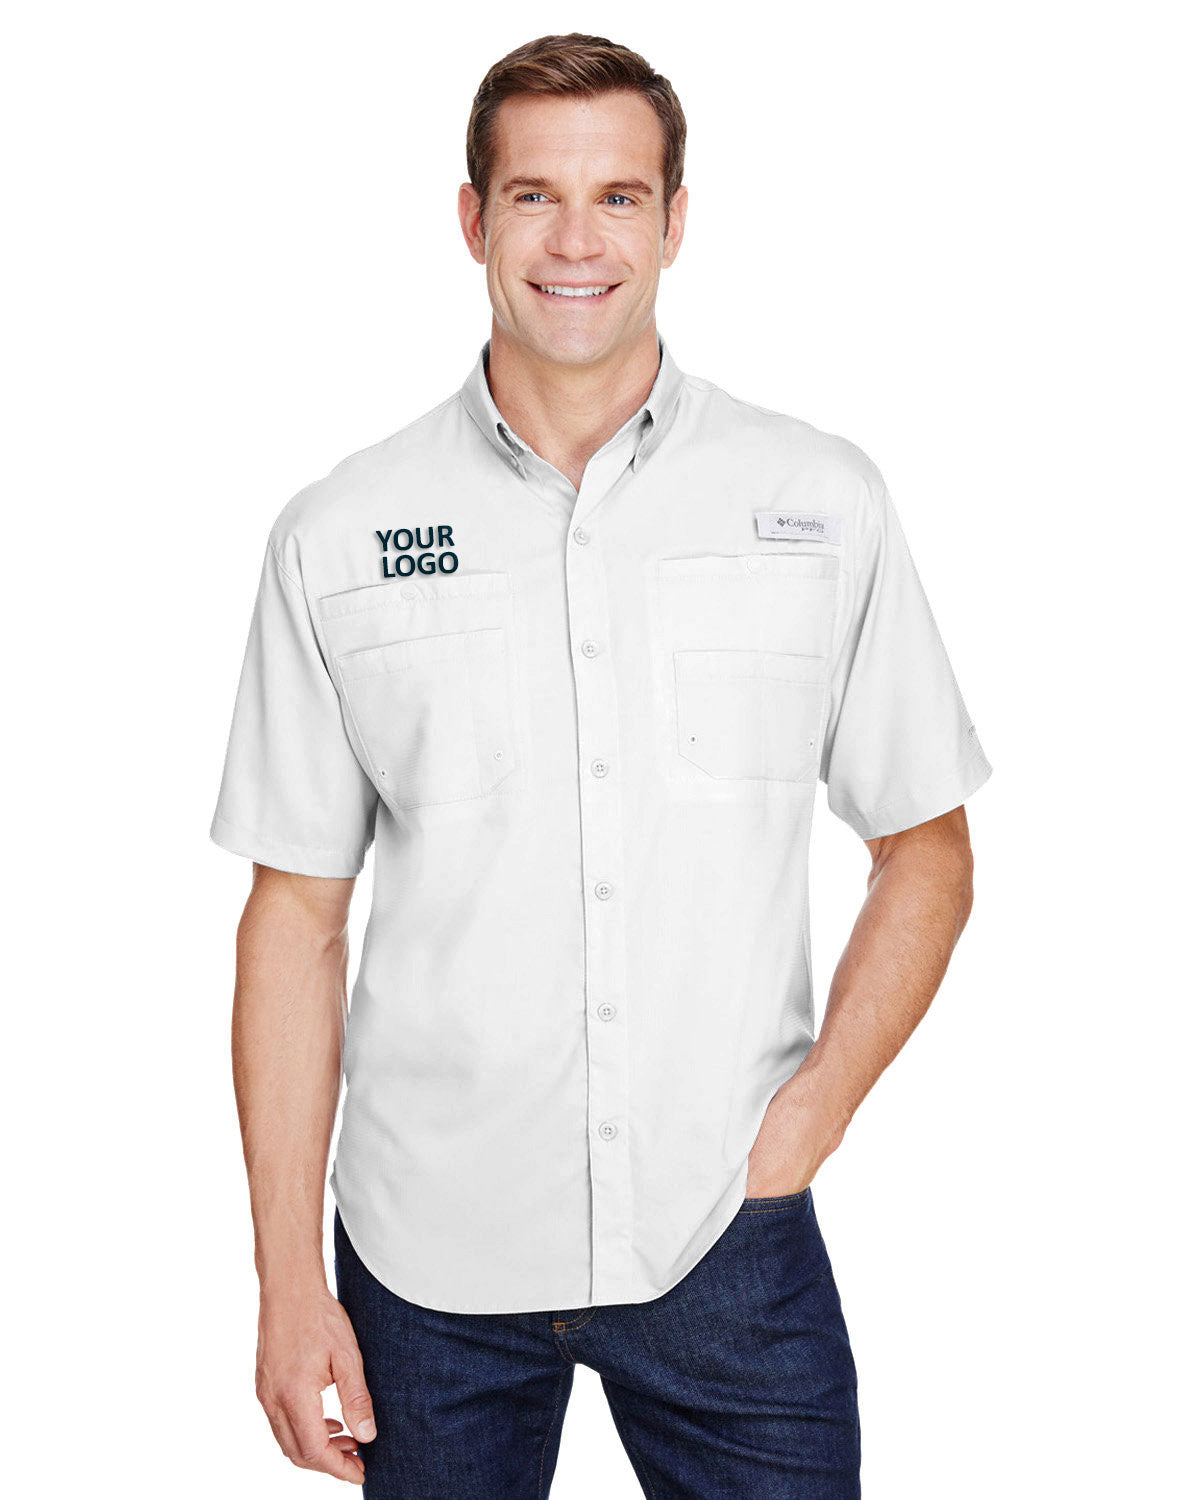 Columbia White 7266 work shirts with logo